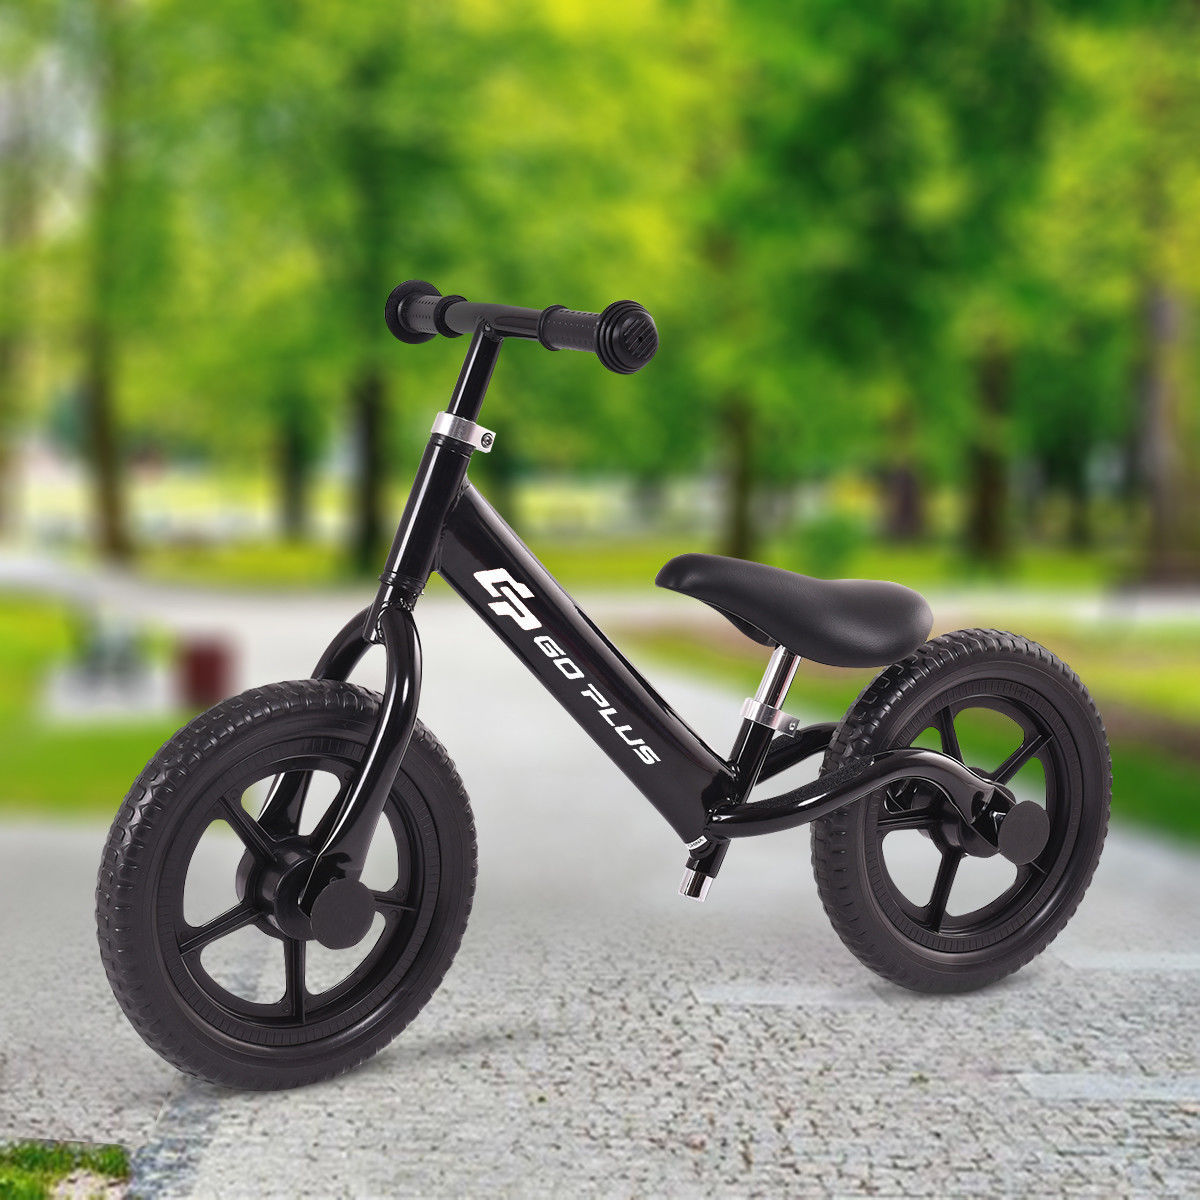 Goplus 12'' Balance Bike Classic Kids No-Pedal Learn To Ride Pre Bike w/ Adjustable Seat, Black - image 2 of 8